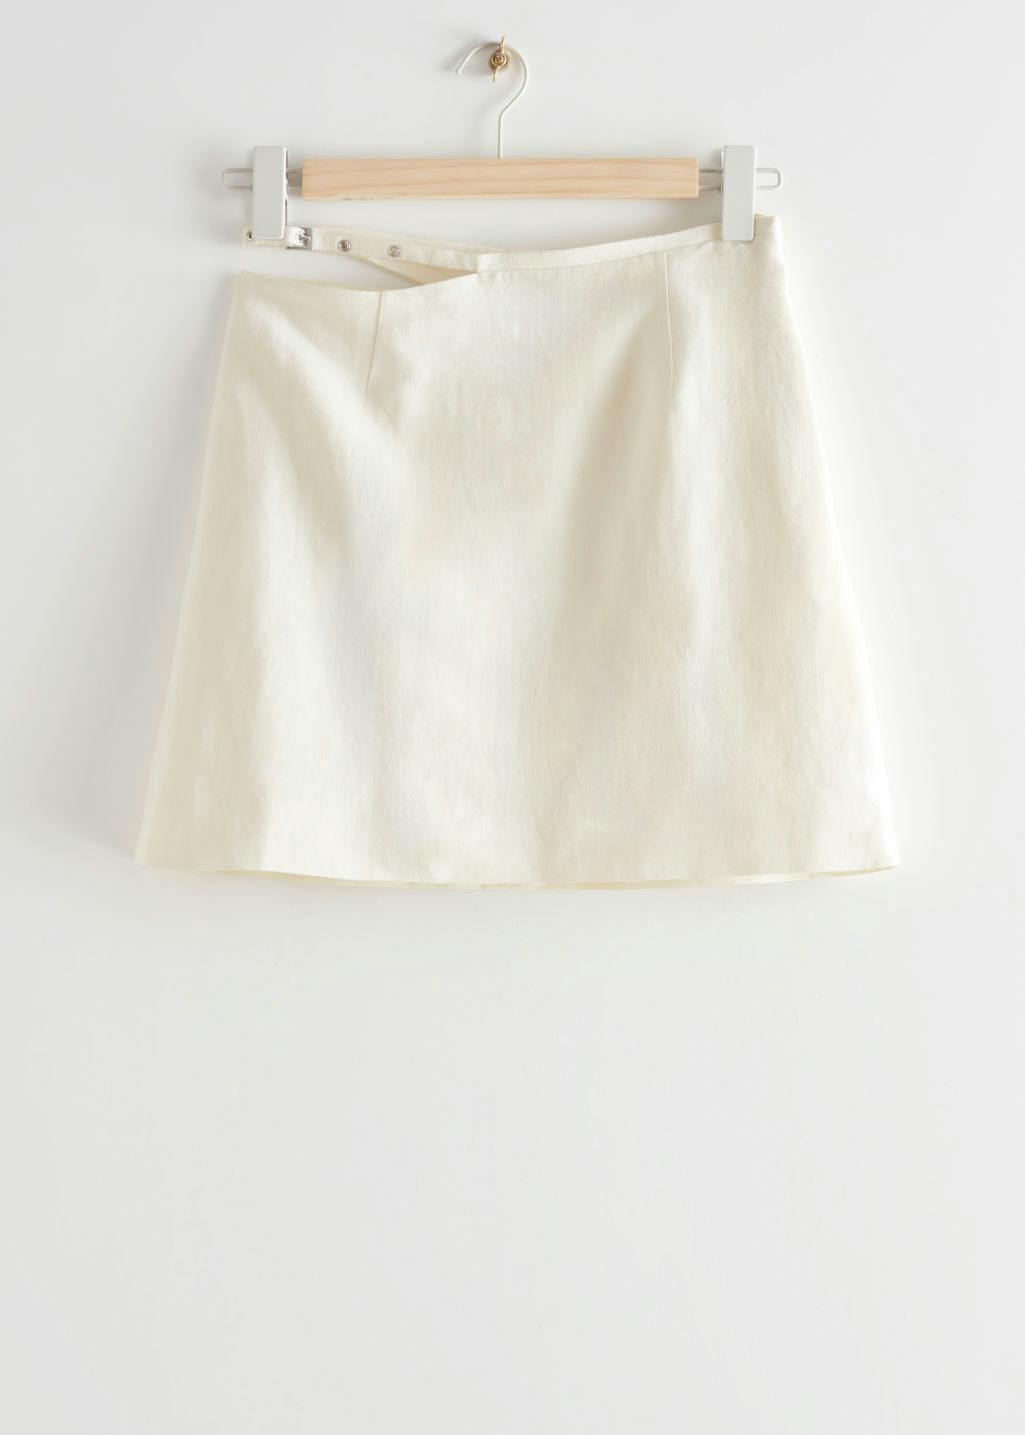 Cute looking amateur wears white skirt and white panties